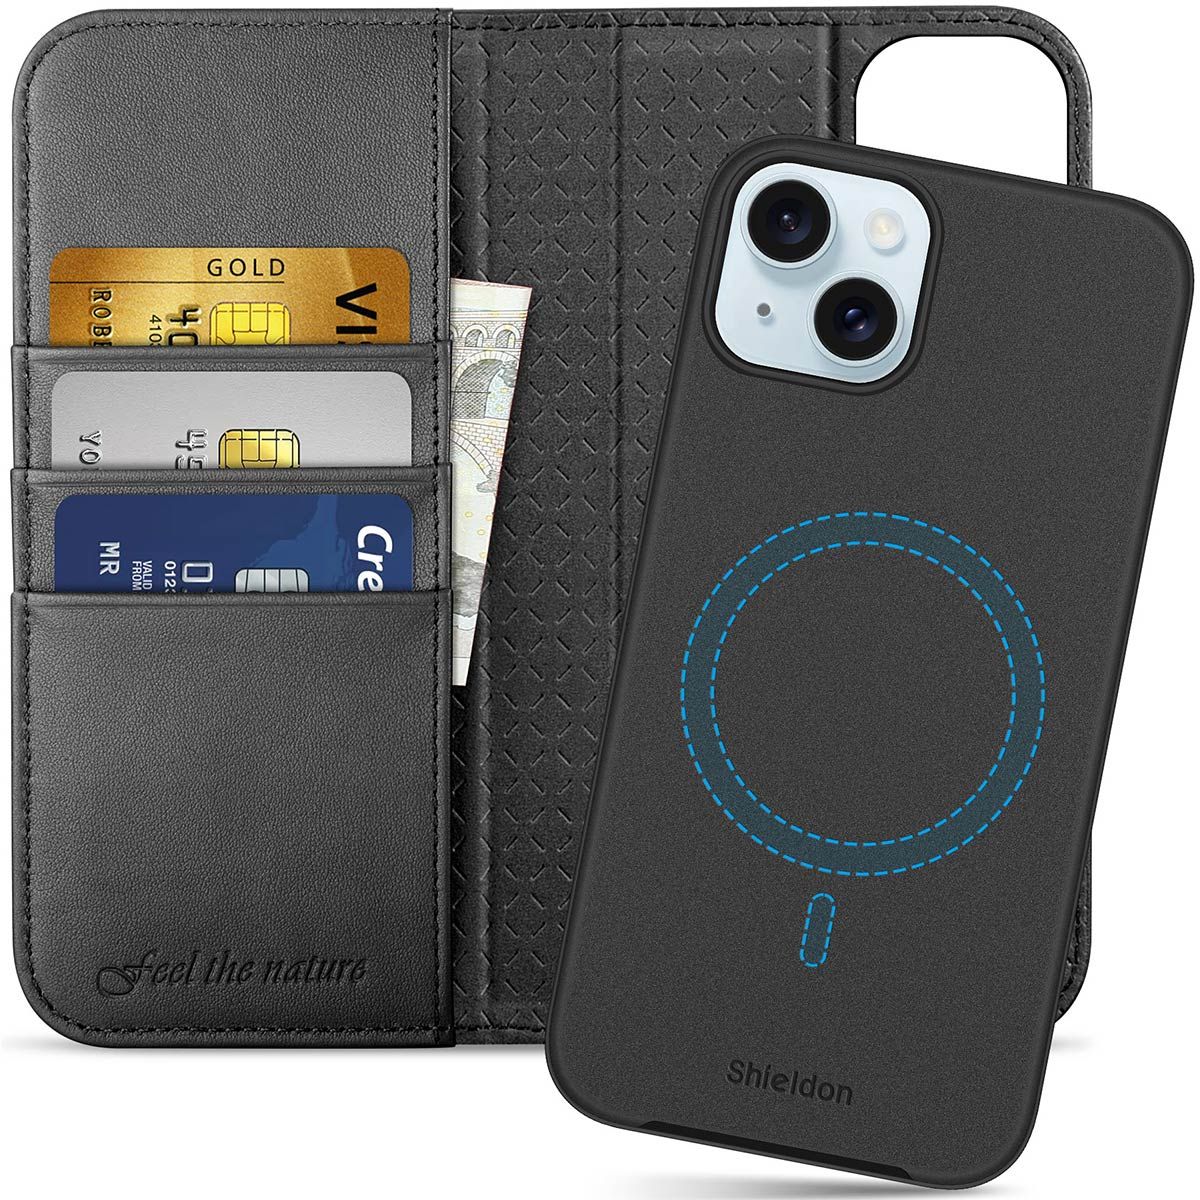 Protector MagSafe Wallet (Black)